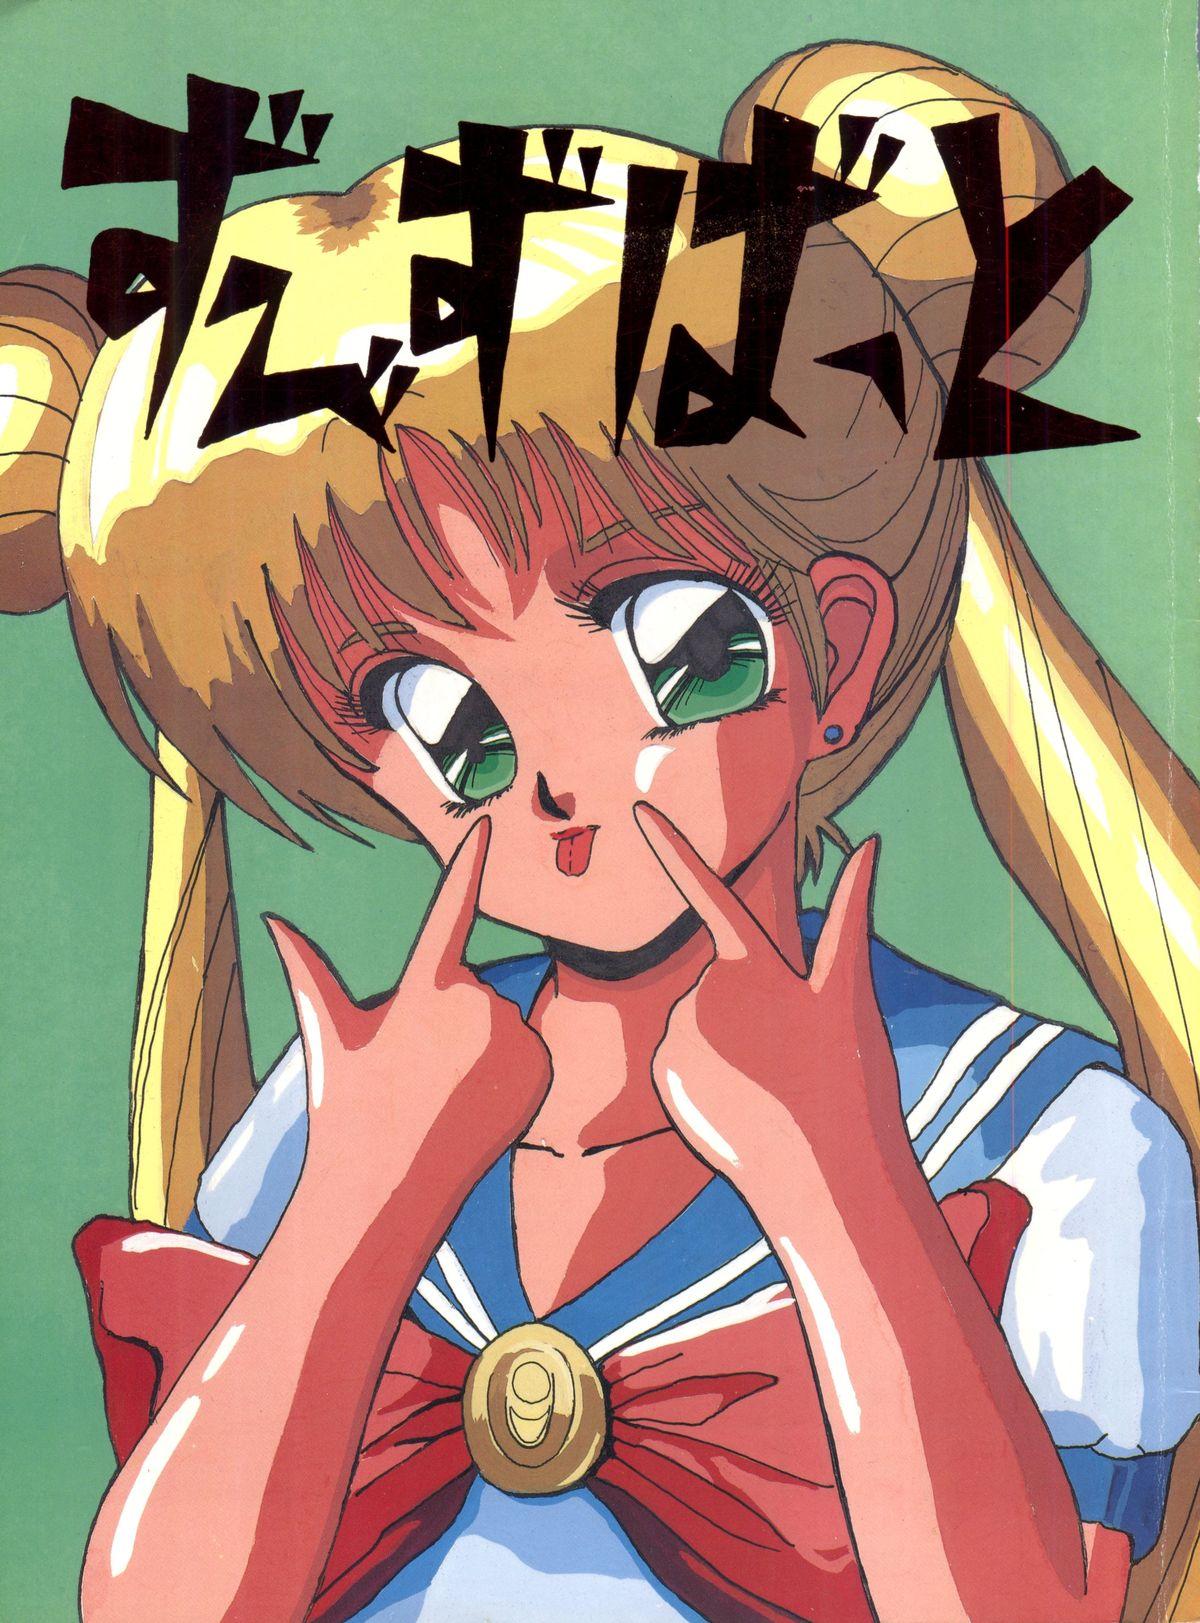 Porno Zubizu Bat - Sailor moon Ranma 12 3x3 eyes Les - Picture 1